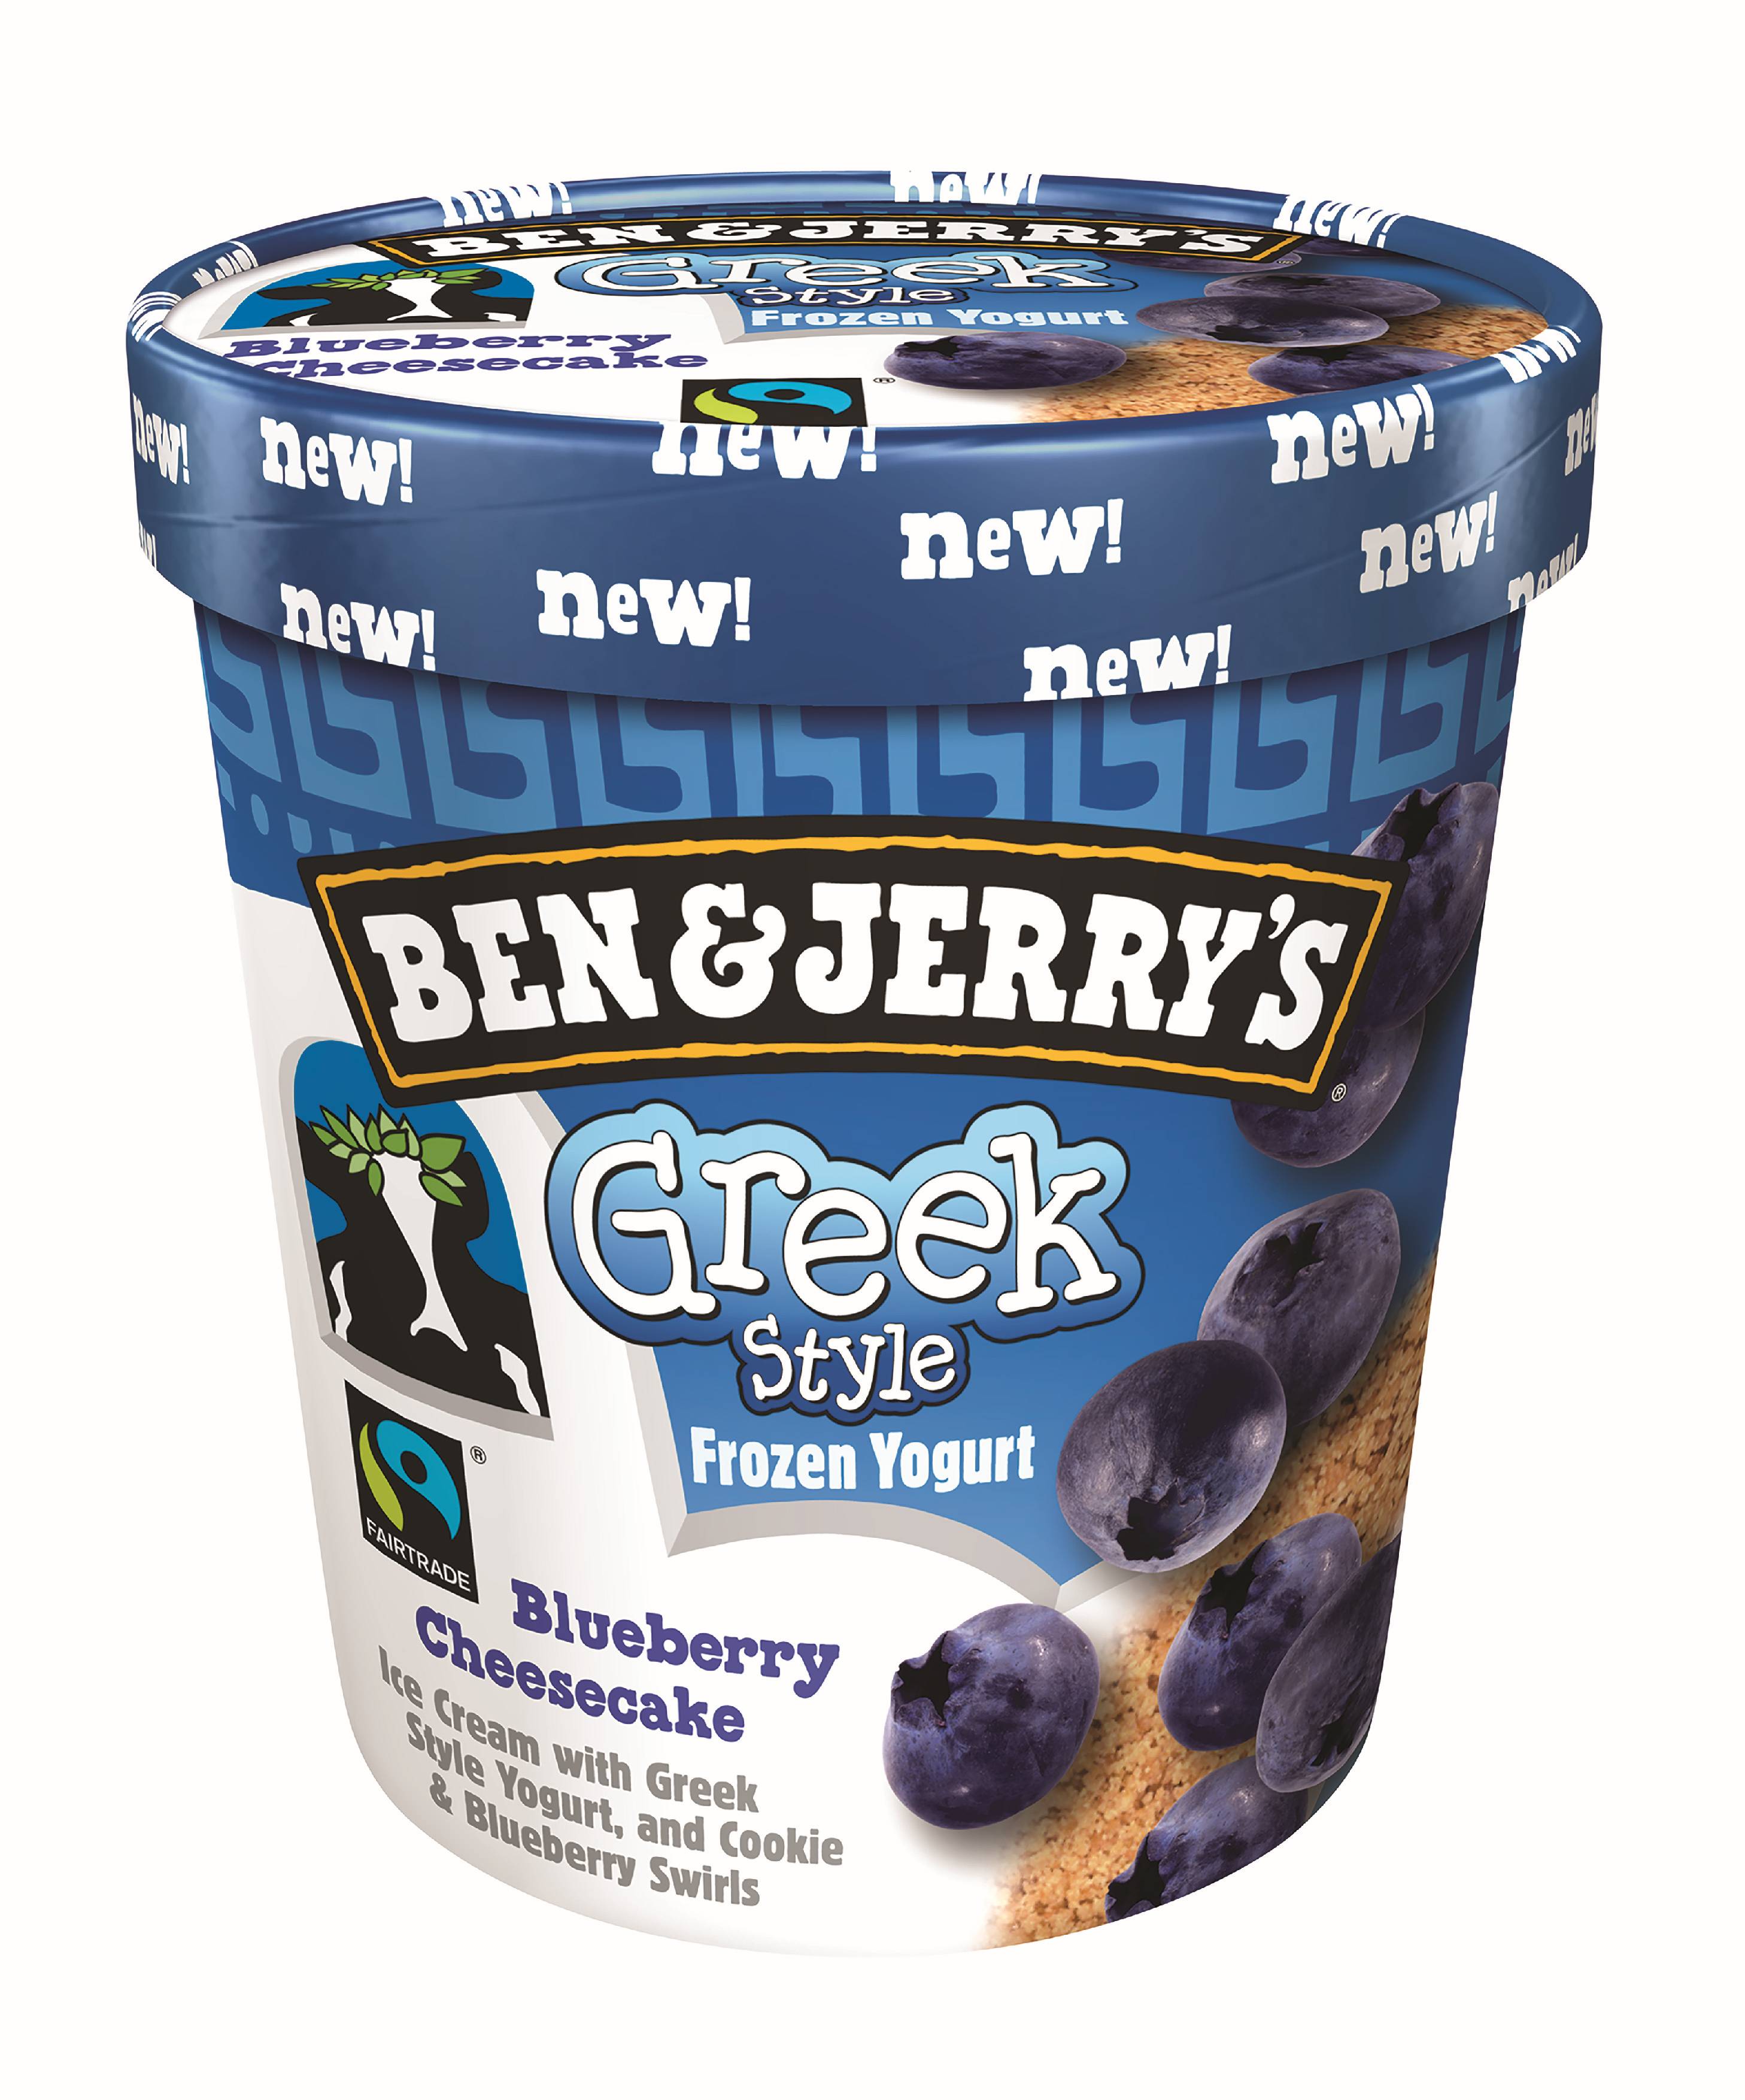 Мороженое черника йогурт. Замороженный йогурт. Frozen Blueberry. Бен энд Джерри.